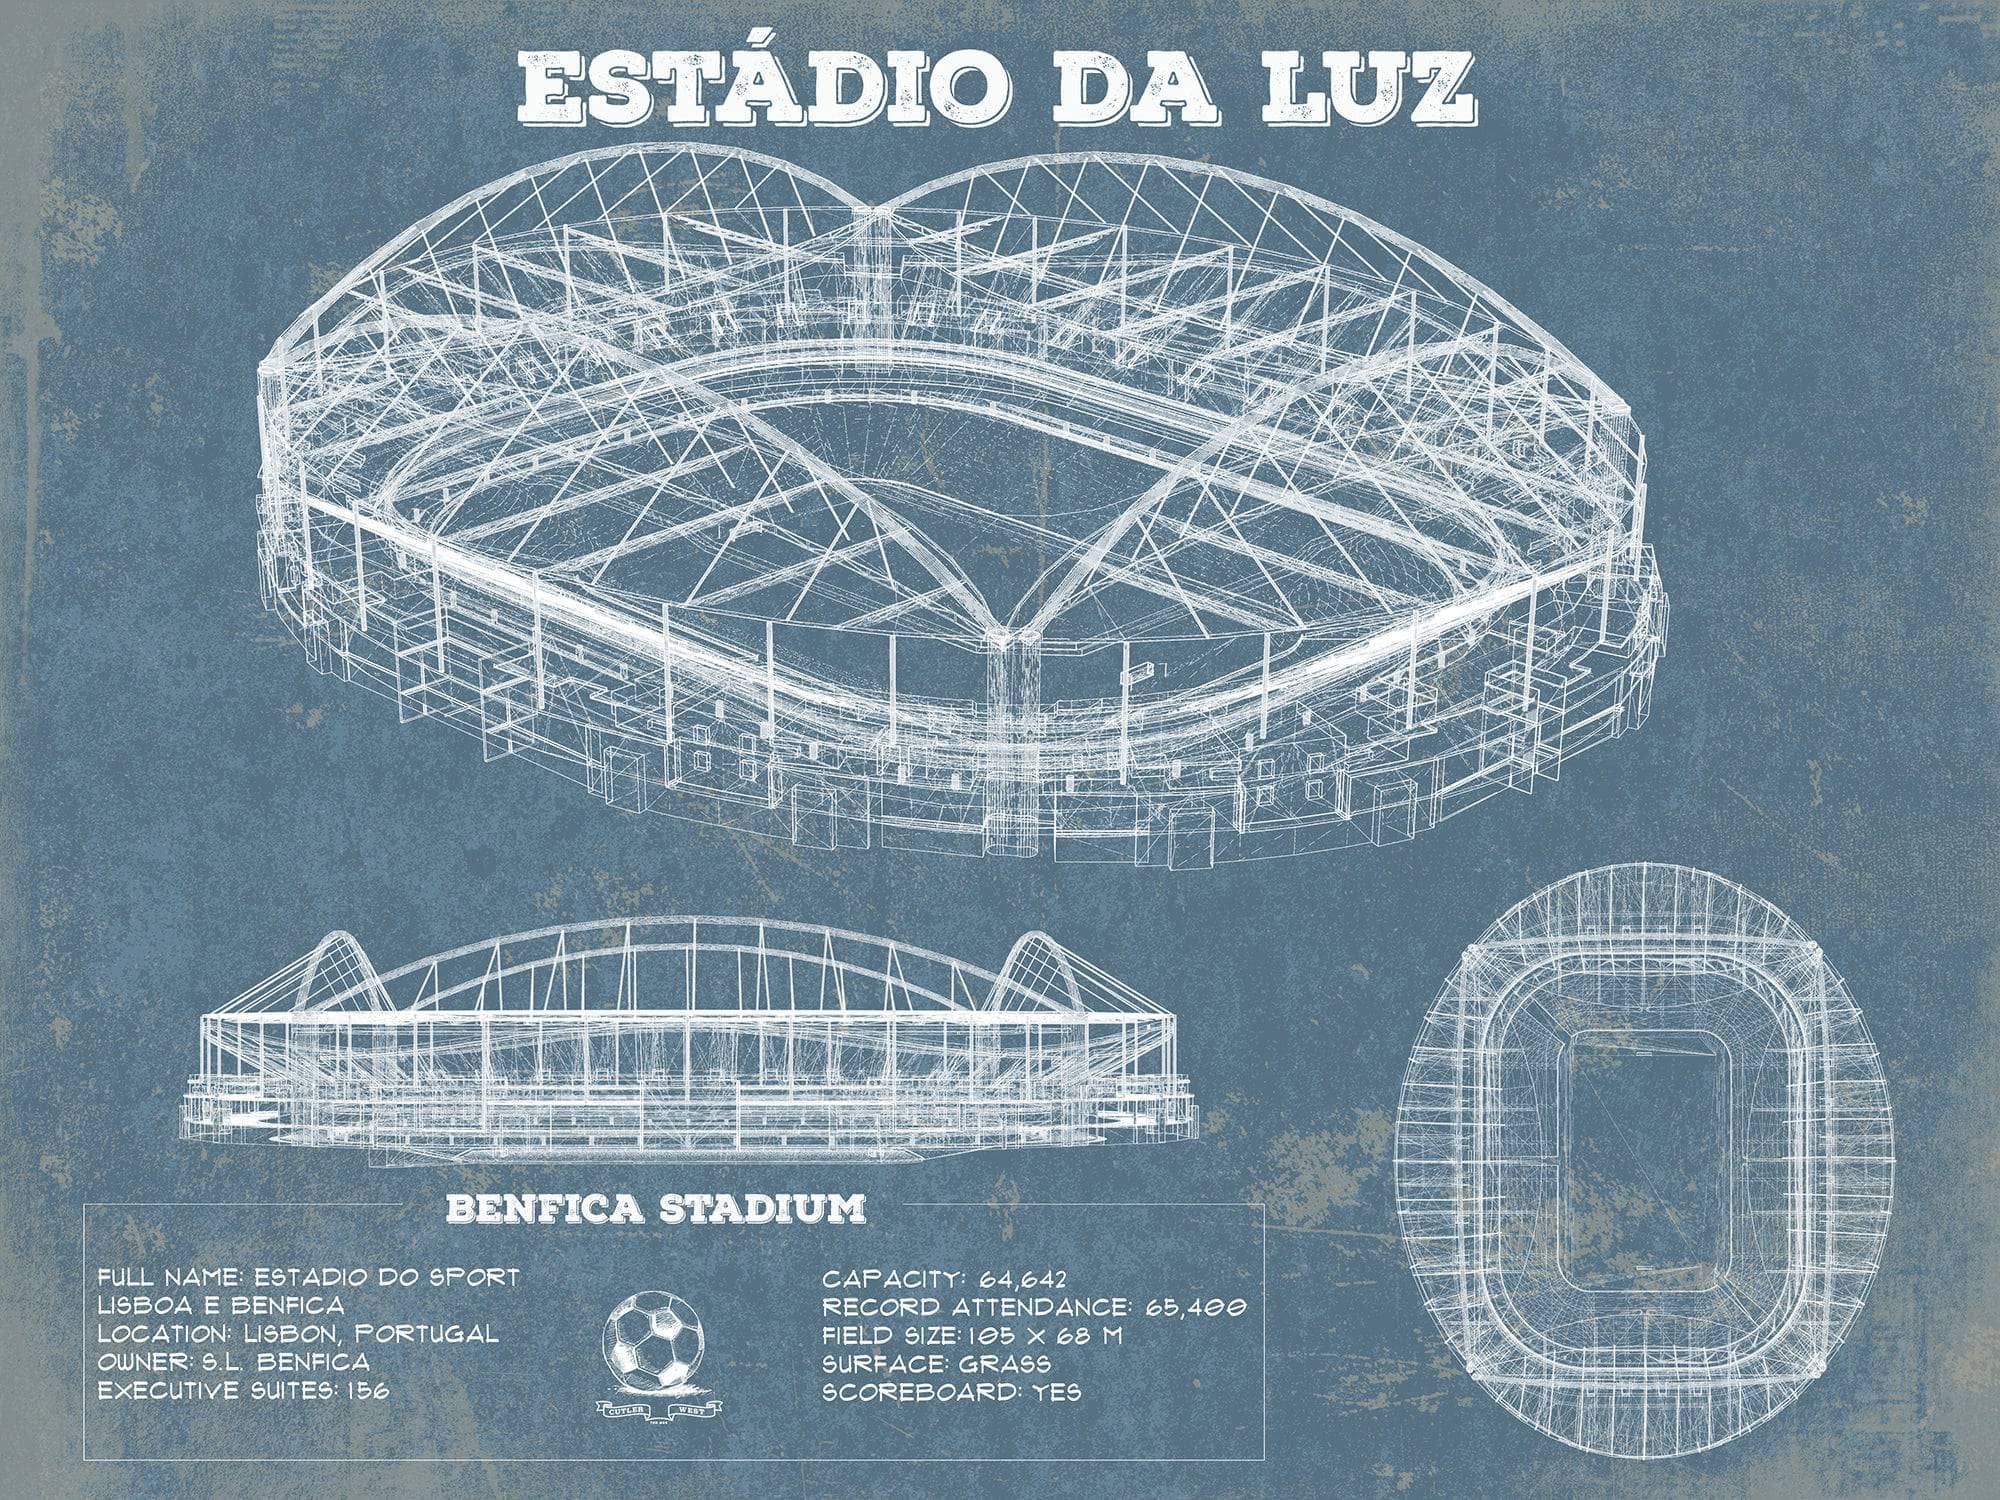 Cutler West Soccer Collection 14" x 11" / Unframed Estudio da Luz (Benfica Stadium) - Portugal National Football Team Blueprint Vintage Soccer Print 933311007_57515